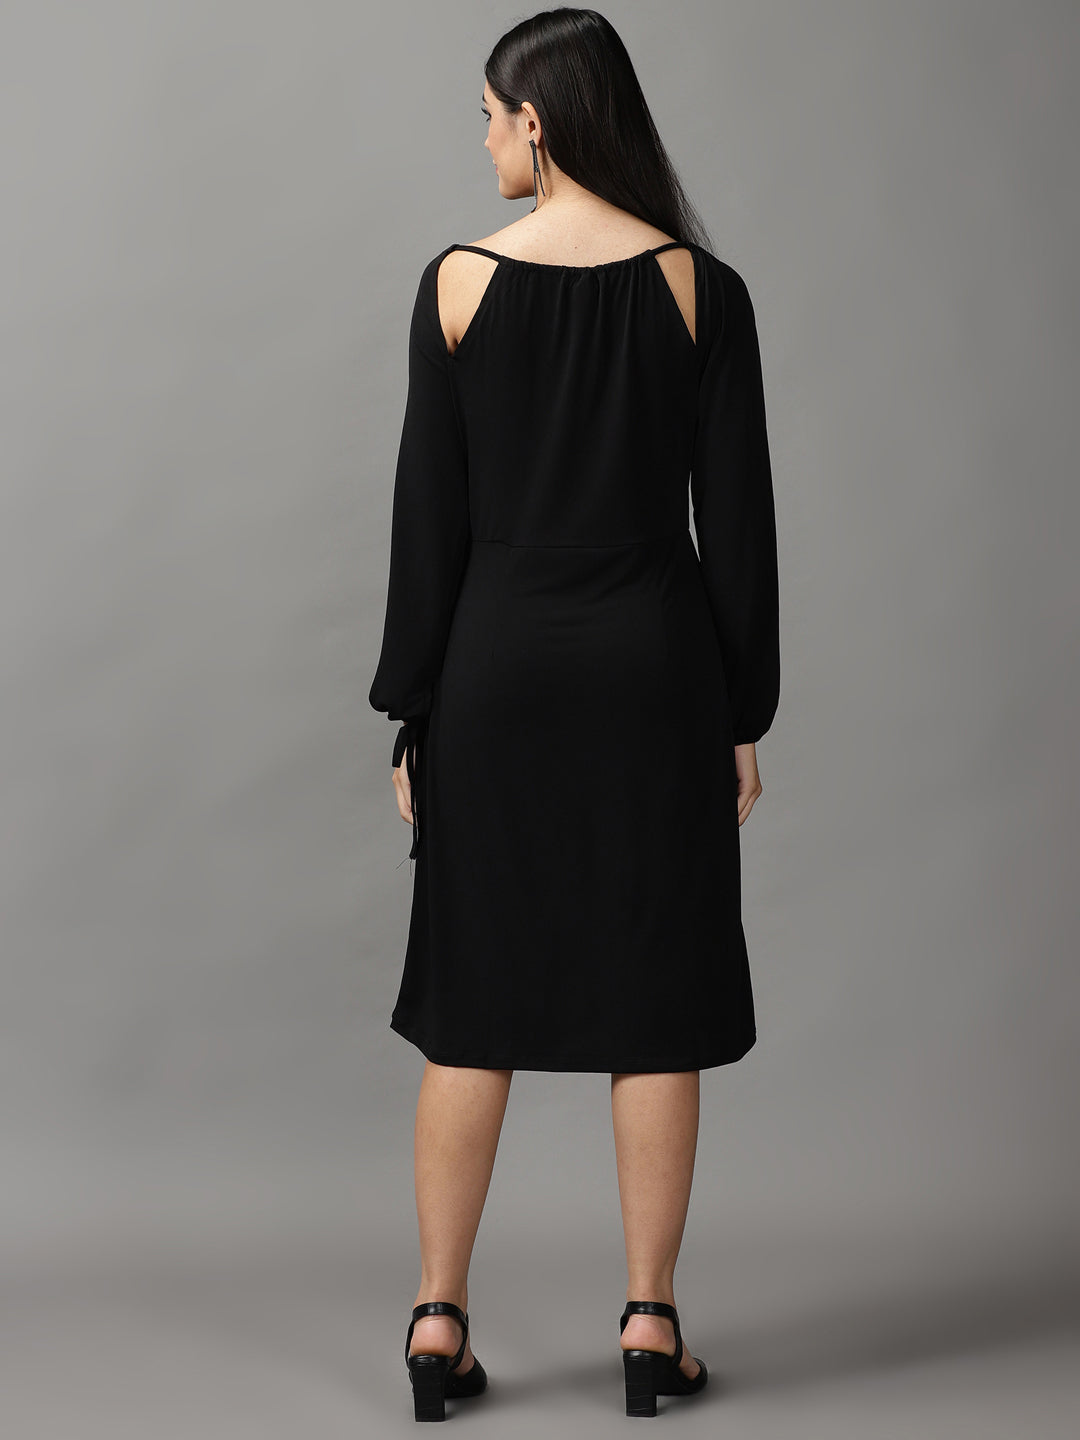 Women's Black Solid A-Line Dress